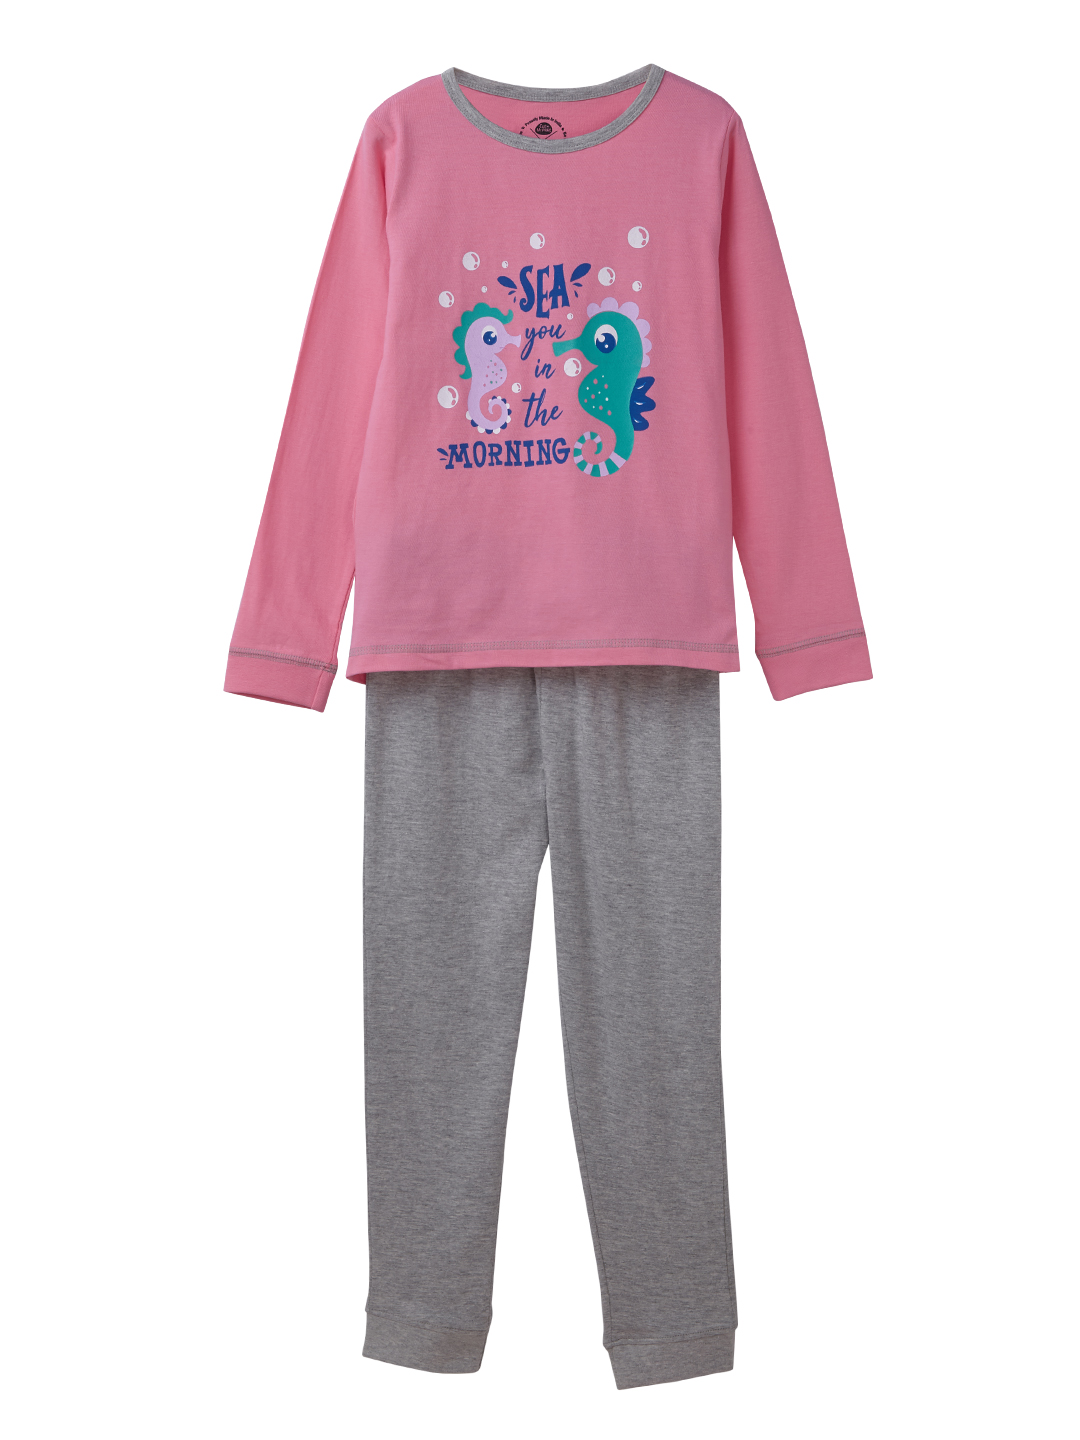 Girls Sleepwear Set - Candy pink full sleeve tee with Seahorse print and contrast pyjama (EOSS)